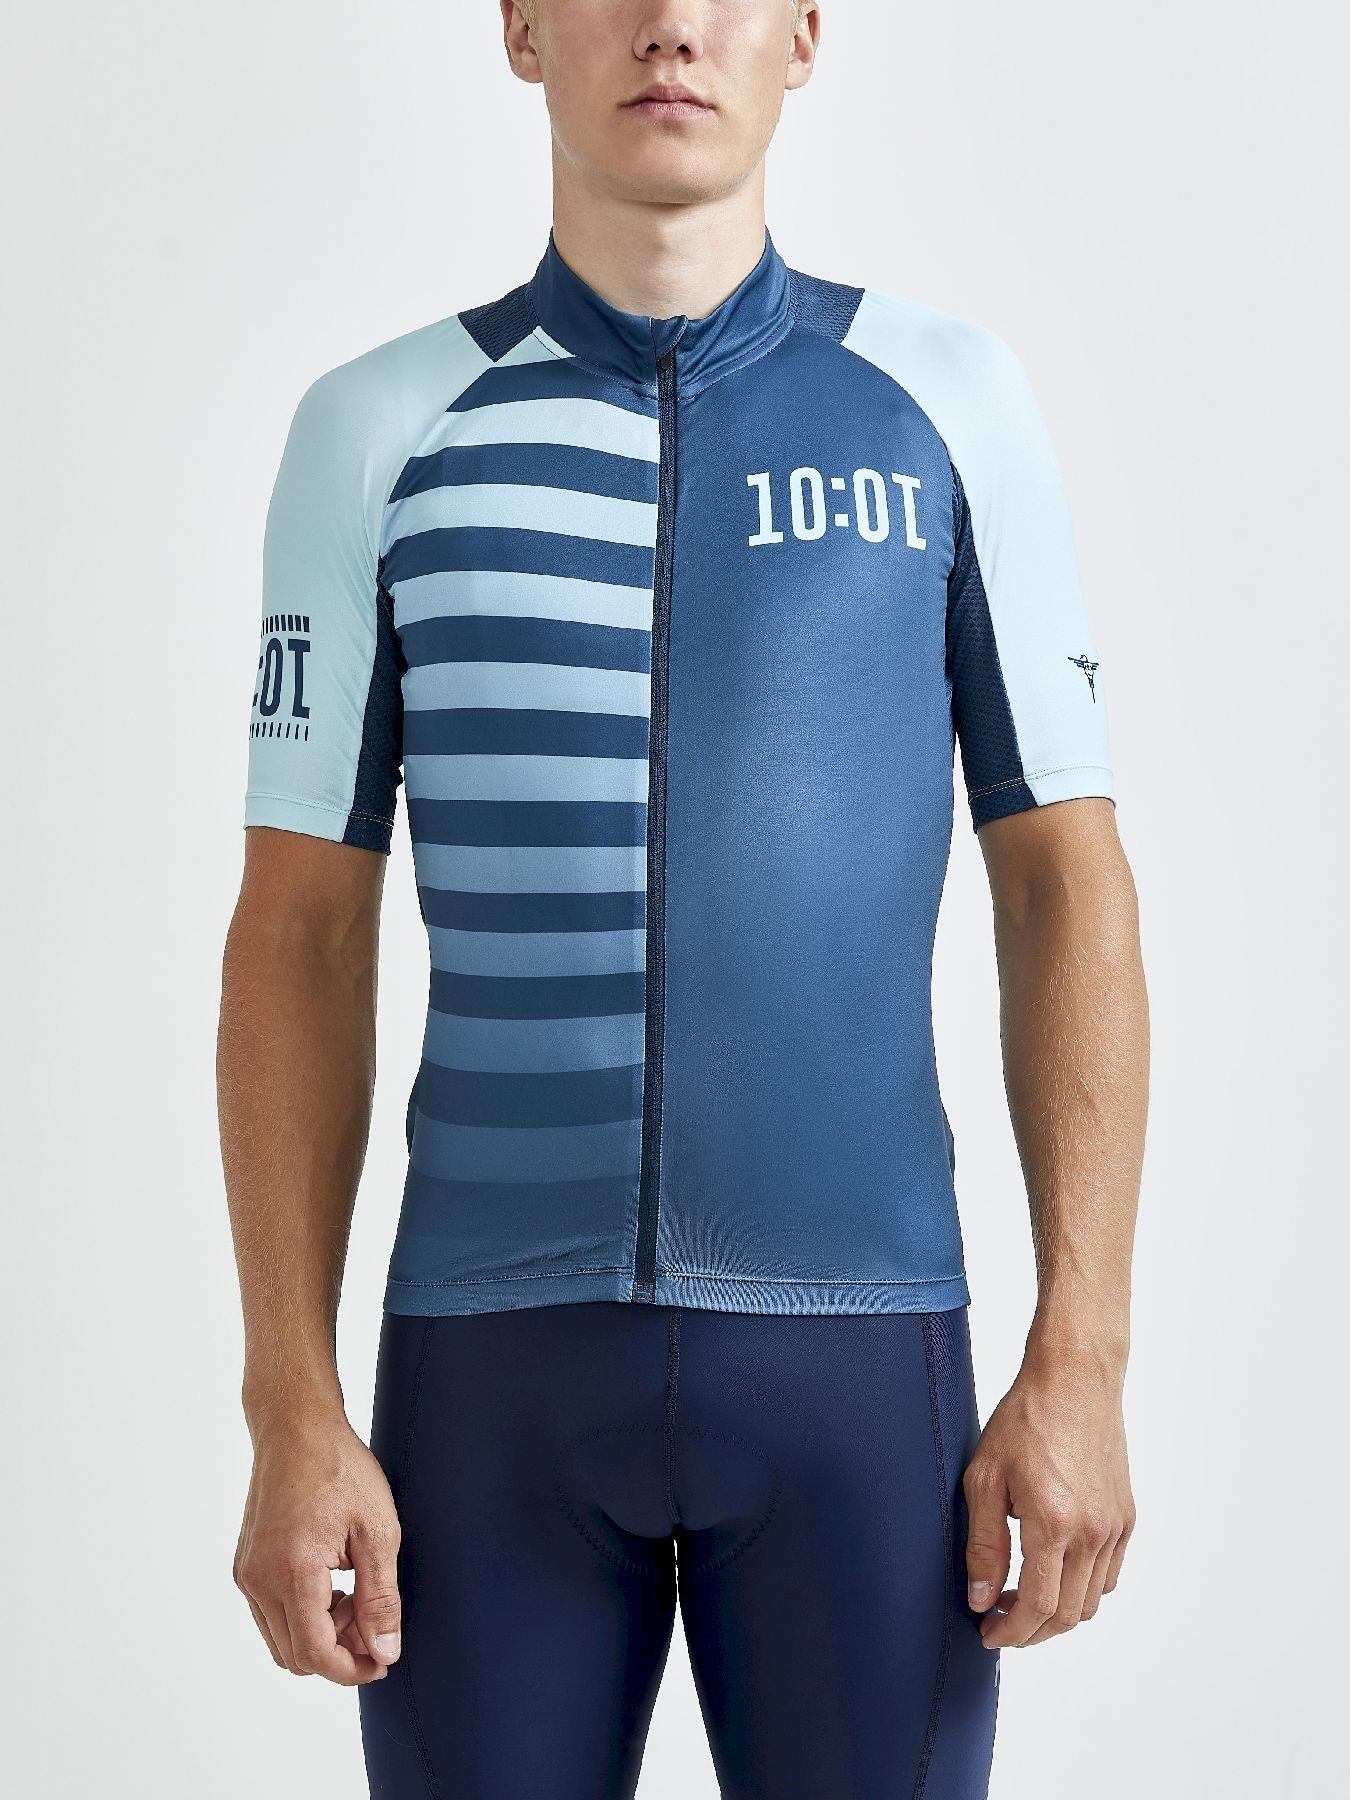 Craft Adv Hmc Endurance Graphic Jersey - Cycling jersey - Men's